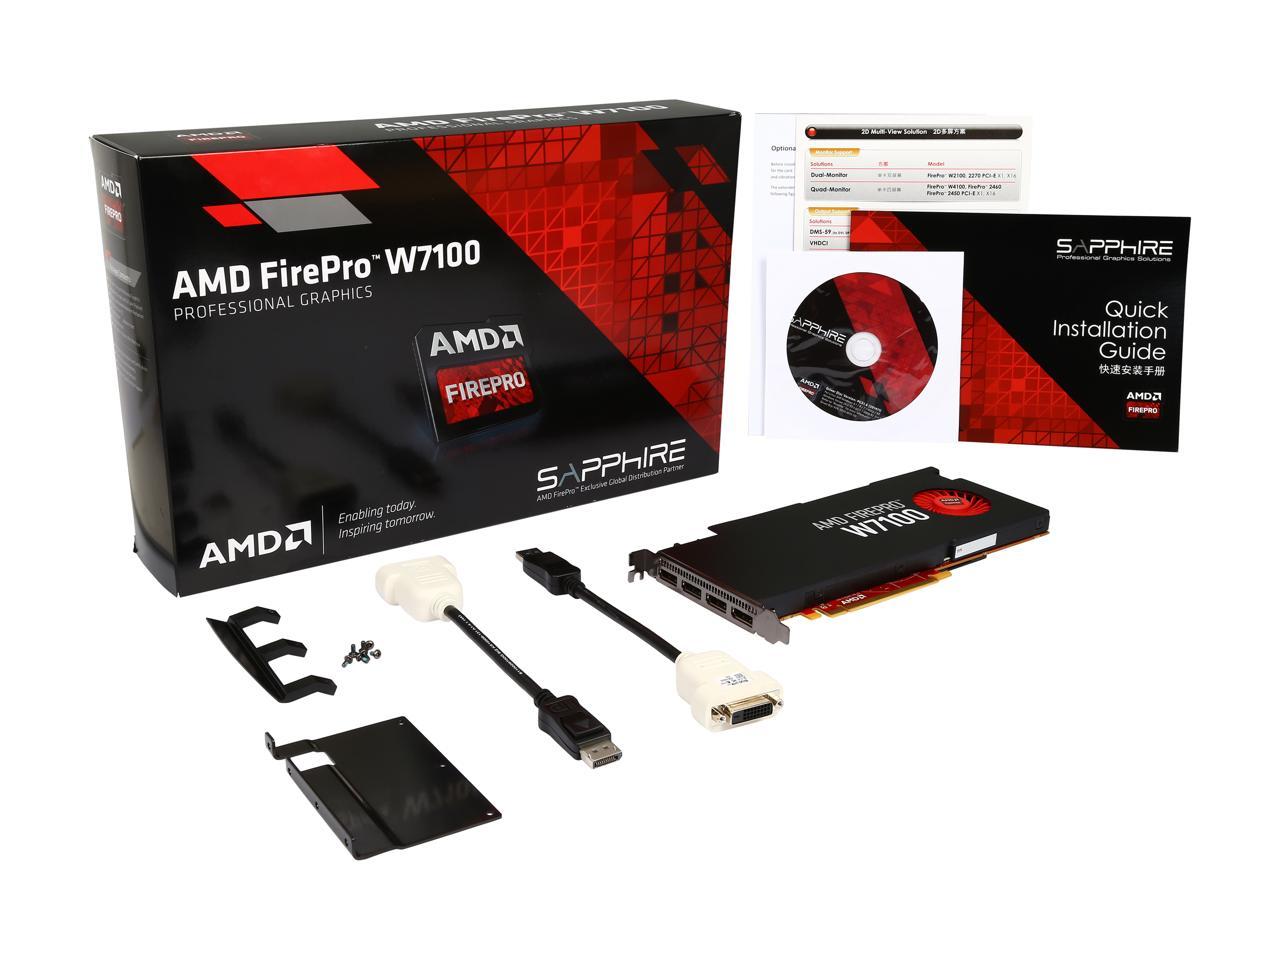 Amd Firepro W7100 100-505724 8Gb 256-Bit Gddr5 Pci Express 3.0 X16 Full Height/Full Length Single-Slot Workstation Video Card